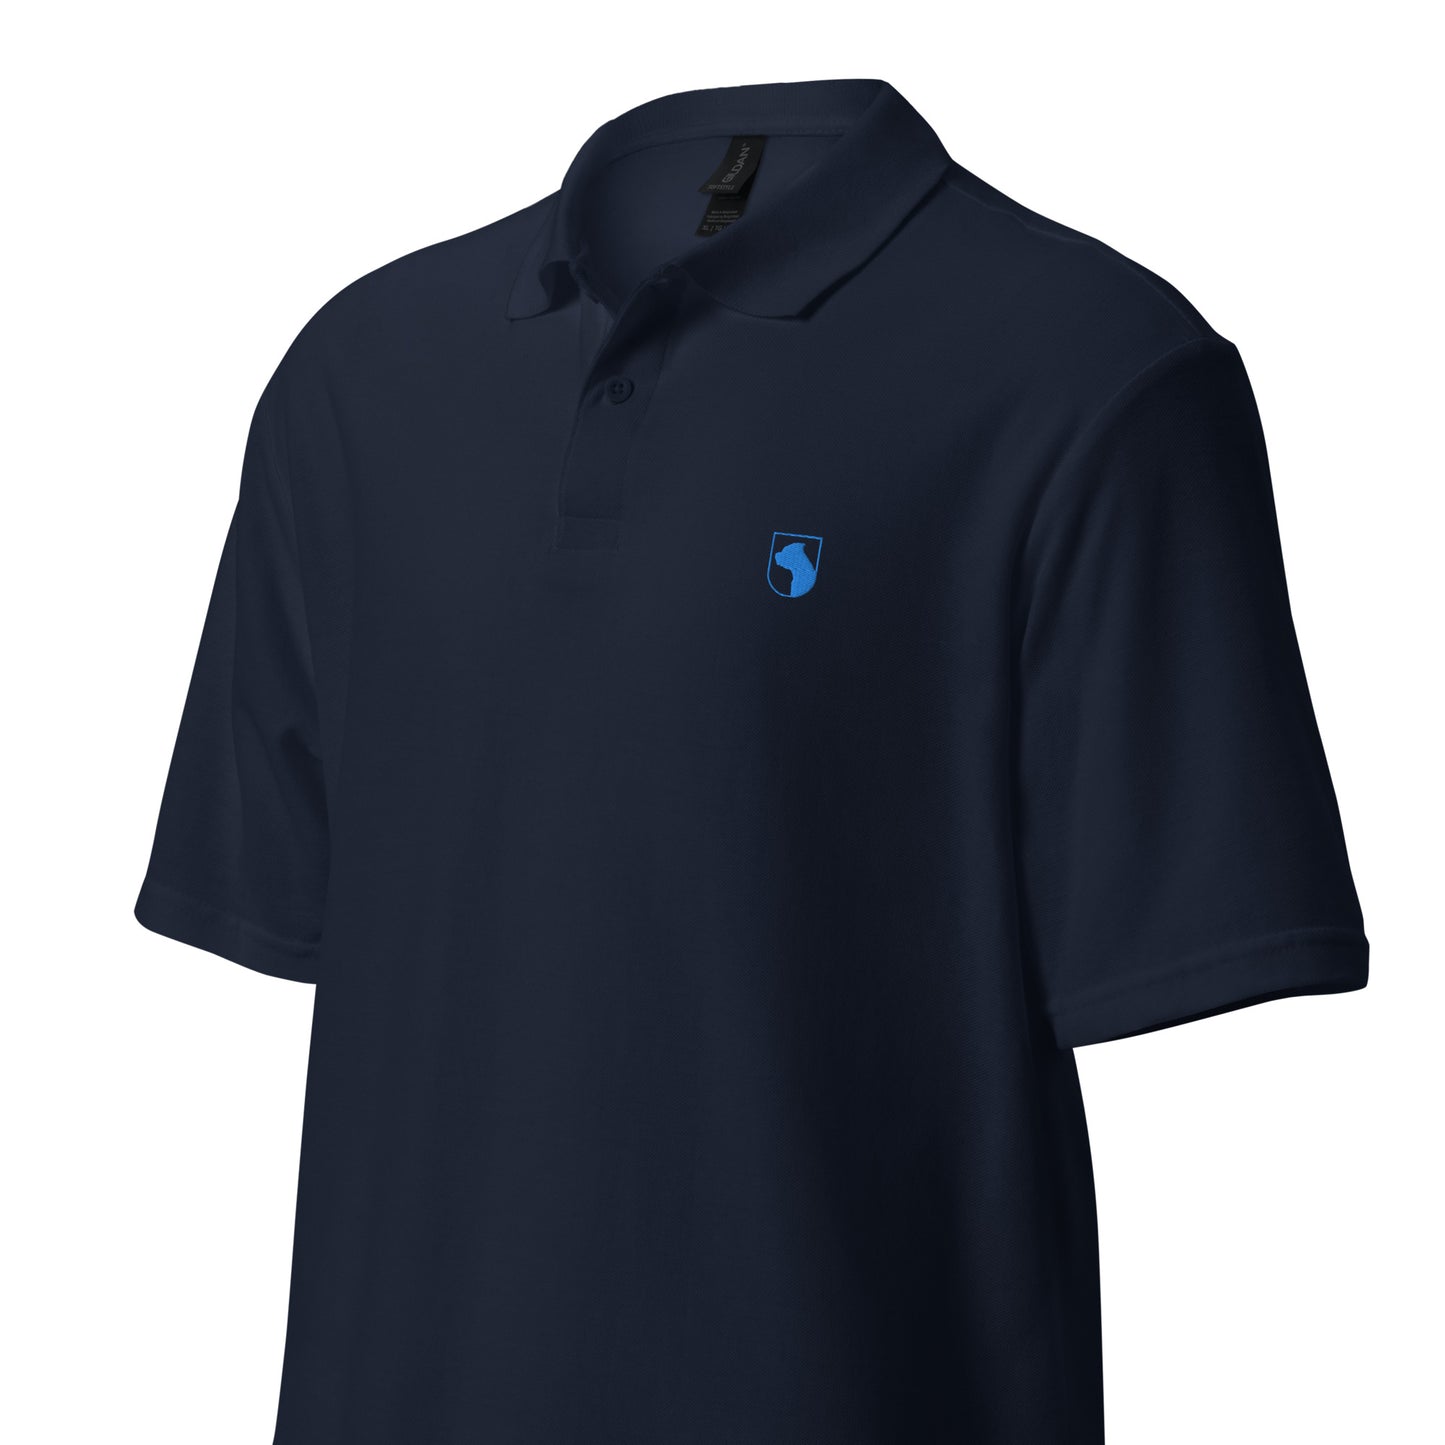 "STAFF Logo" Unisex Piqué-Poloshirt - Staffordshire Bullterrier - blau